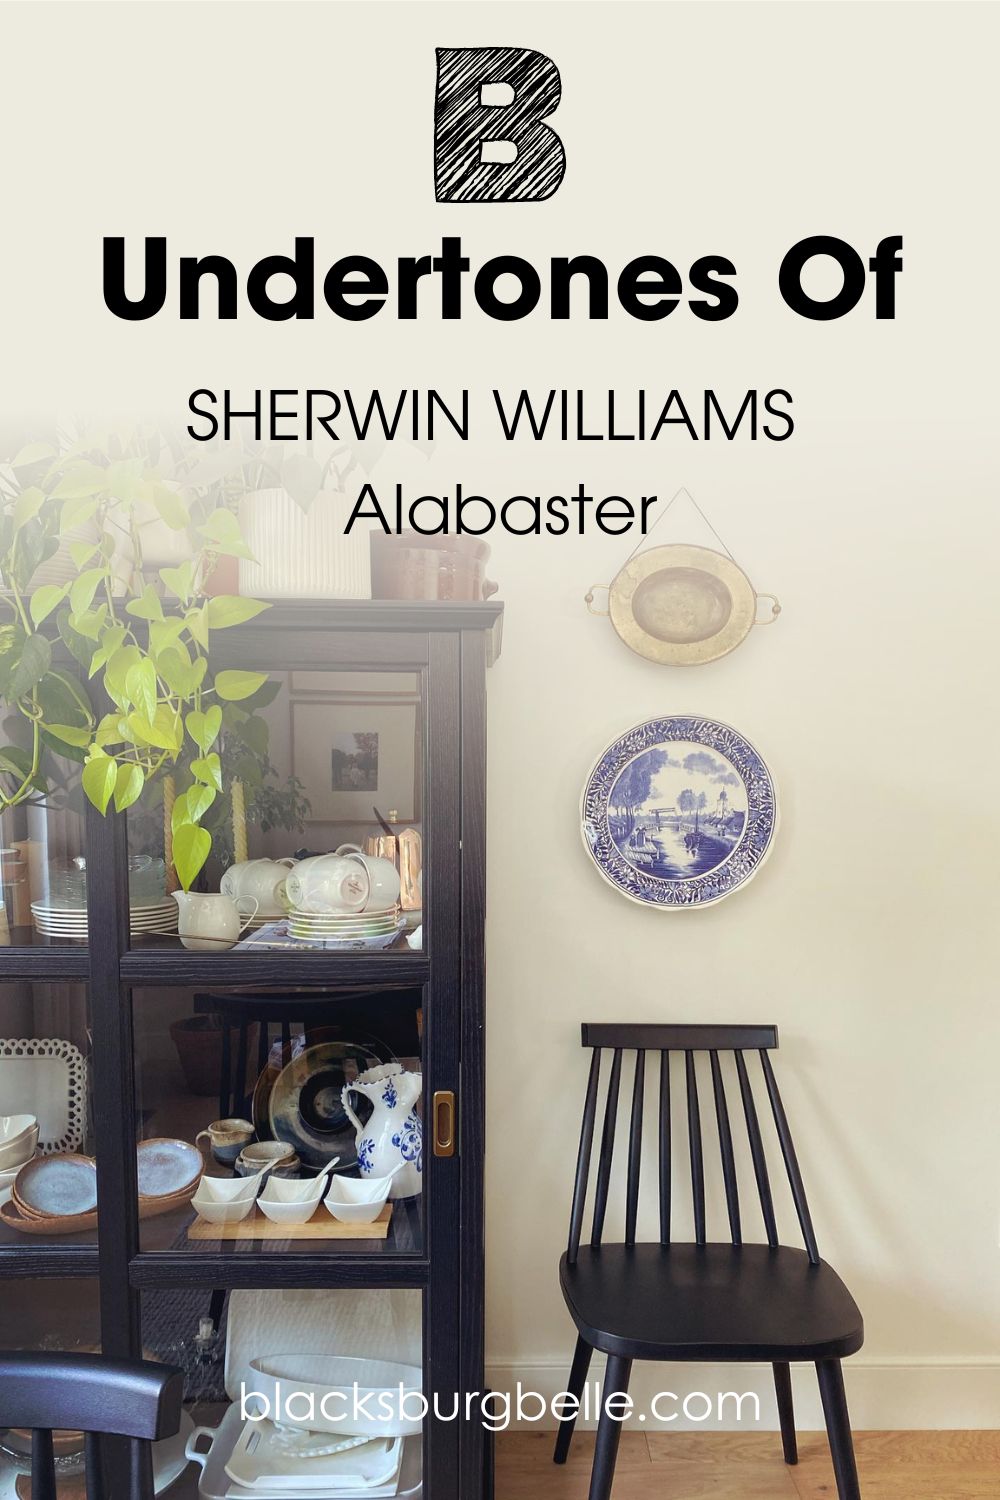 Undertones Of SHERWIN WILLIAMS Alabaster